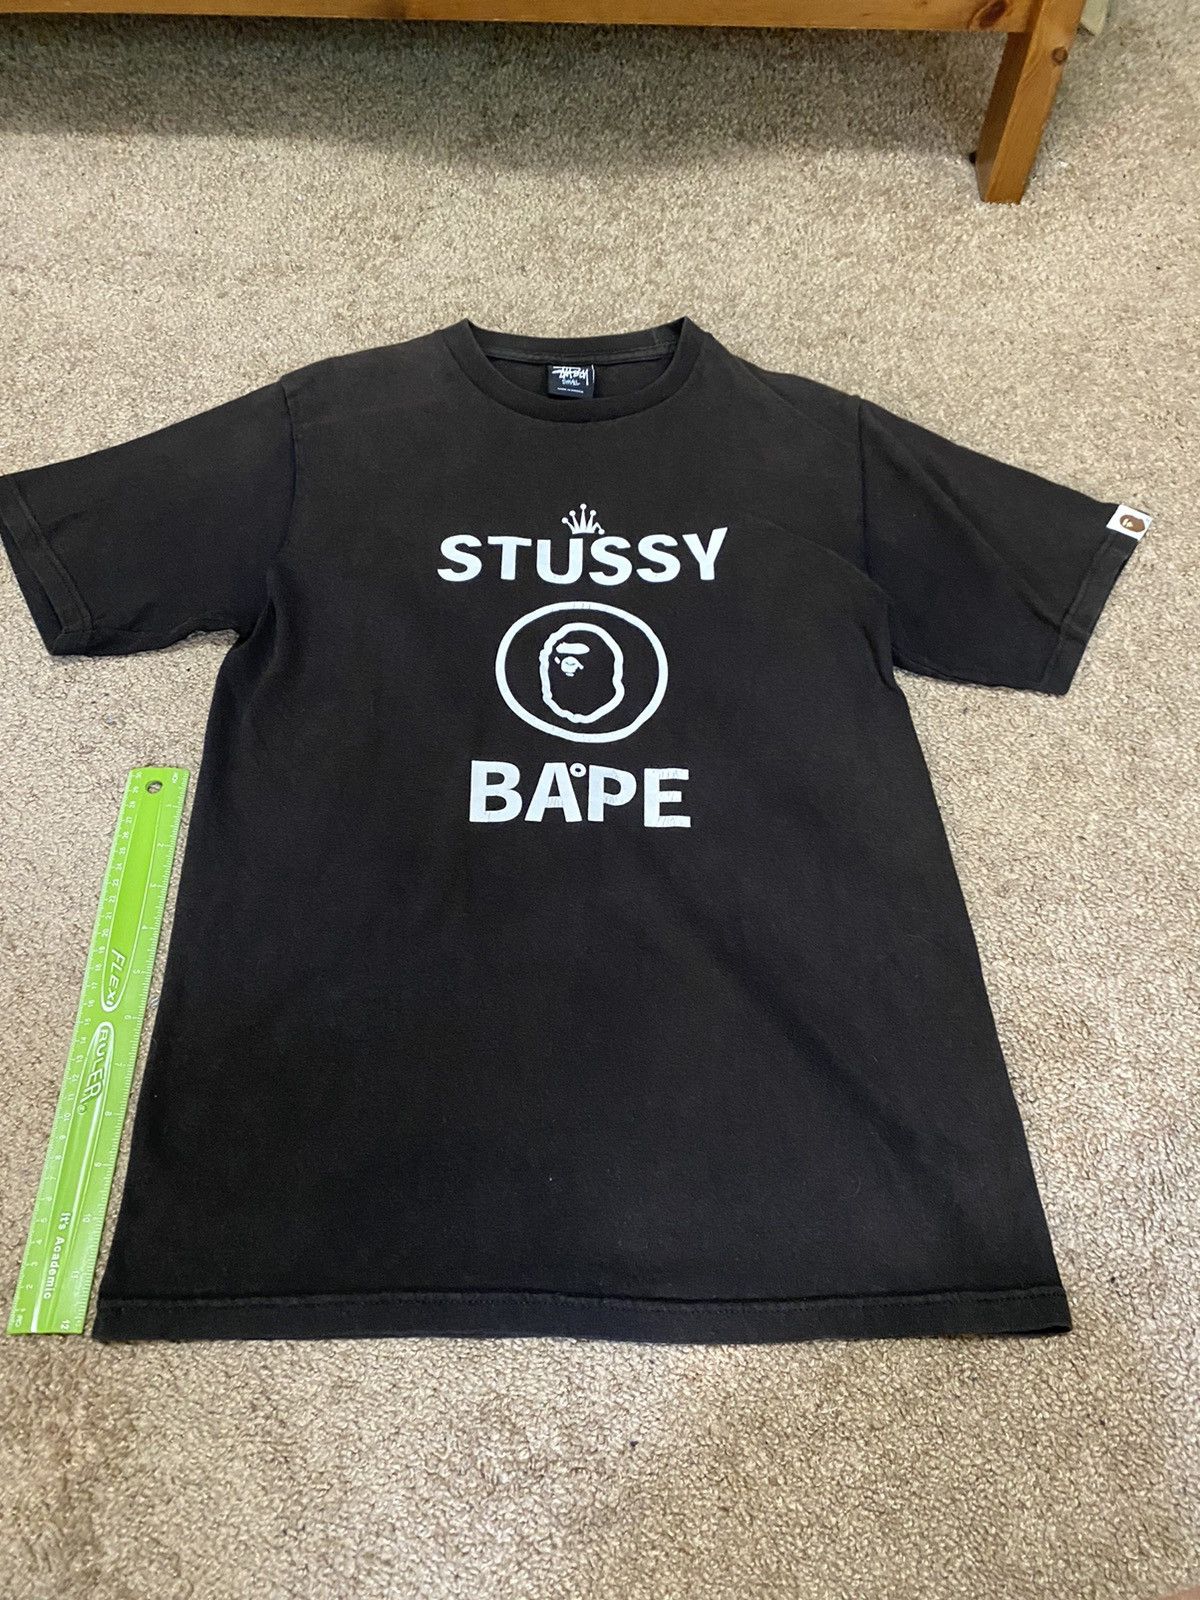 Bape Stussy X Bape First Collab T Shirt Men sz S Vintage 2010 Size US S / EU 44-46 / 1 - 6 Thumbnail